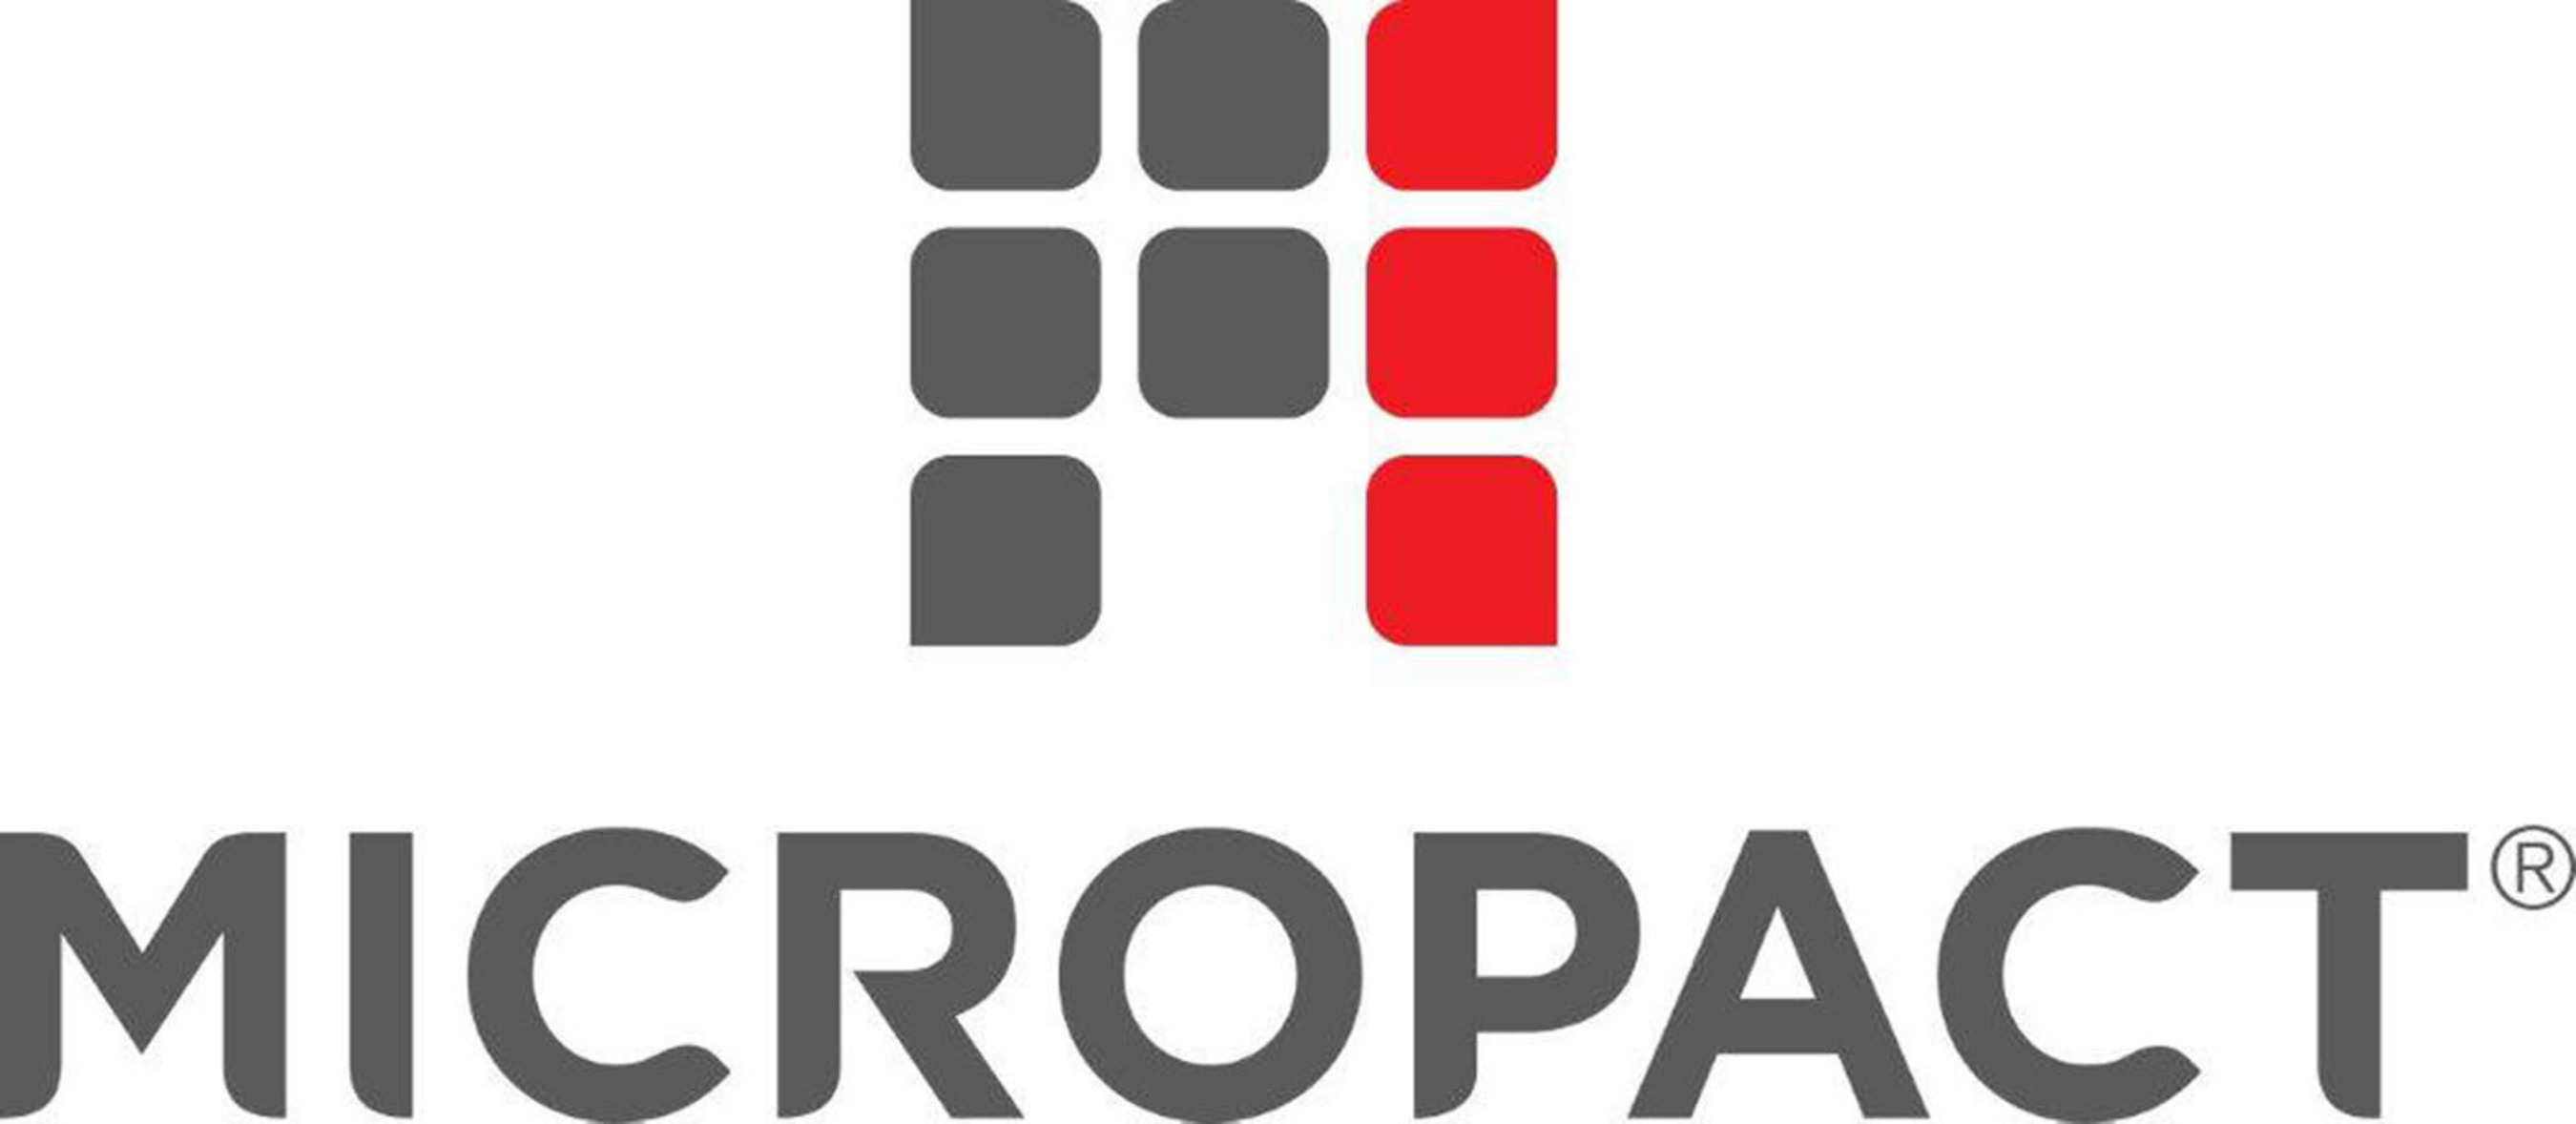 MicroPact logo.